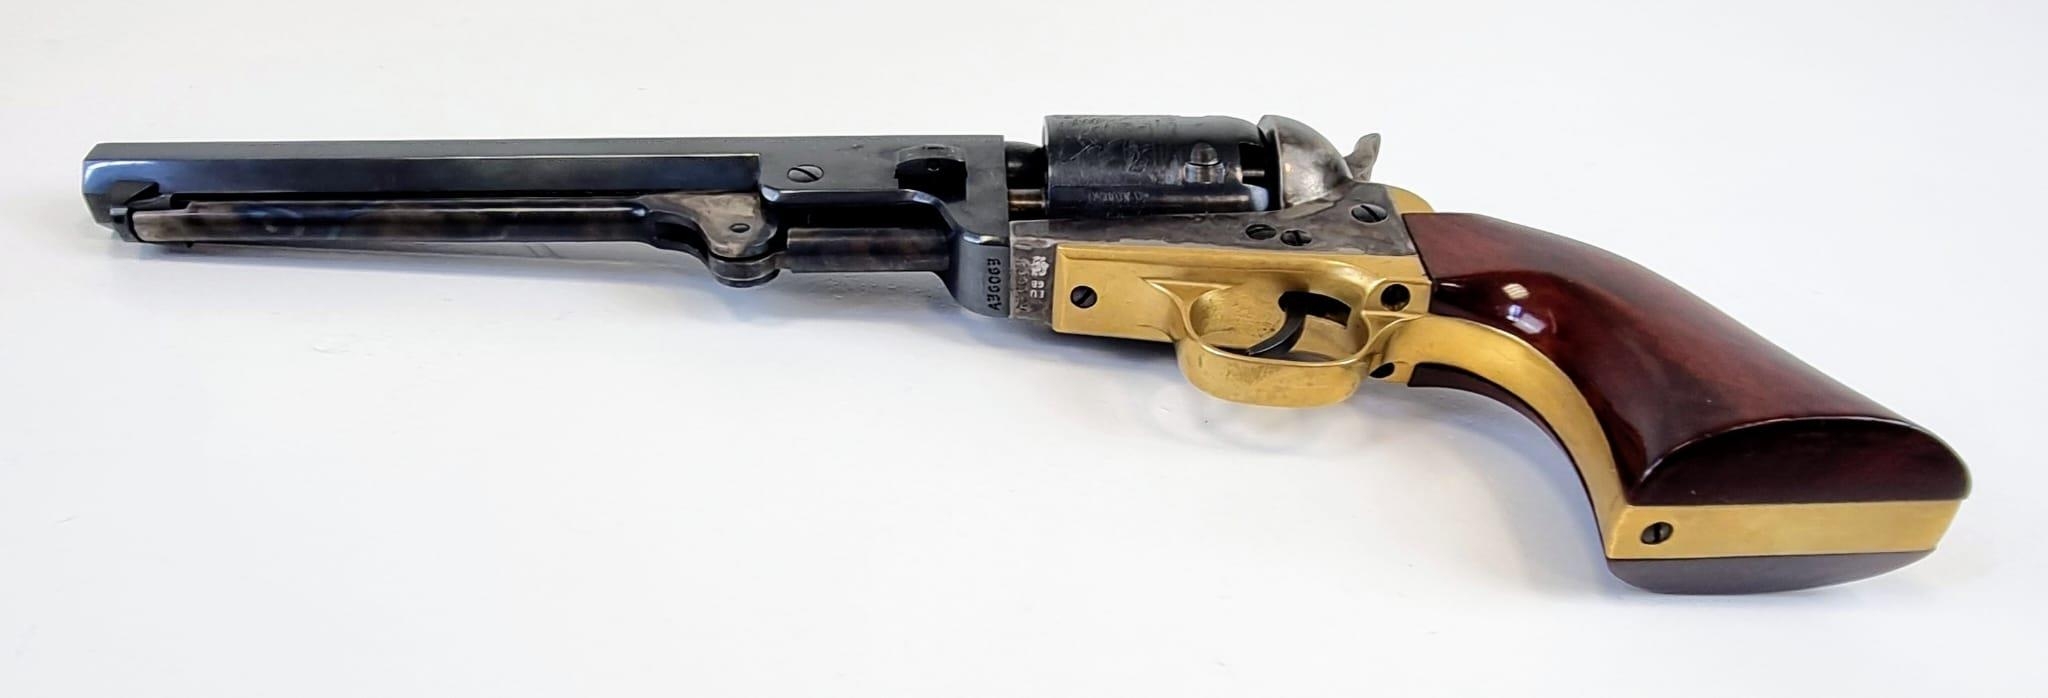 A Deactivated 1851 Uberti Model Navy Black Powder Revolver Pistol. Muzzle loading. Calibre -.36. 7.5 - Image 5 of 11